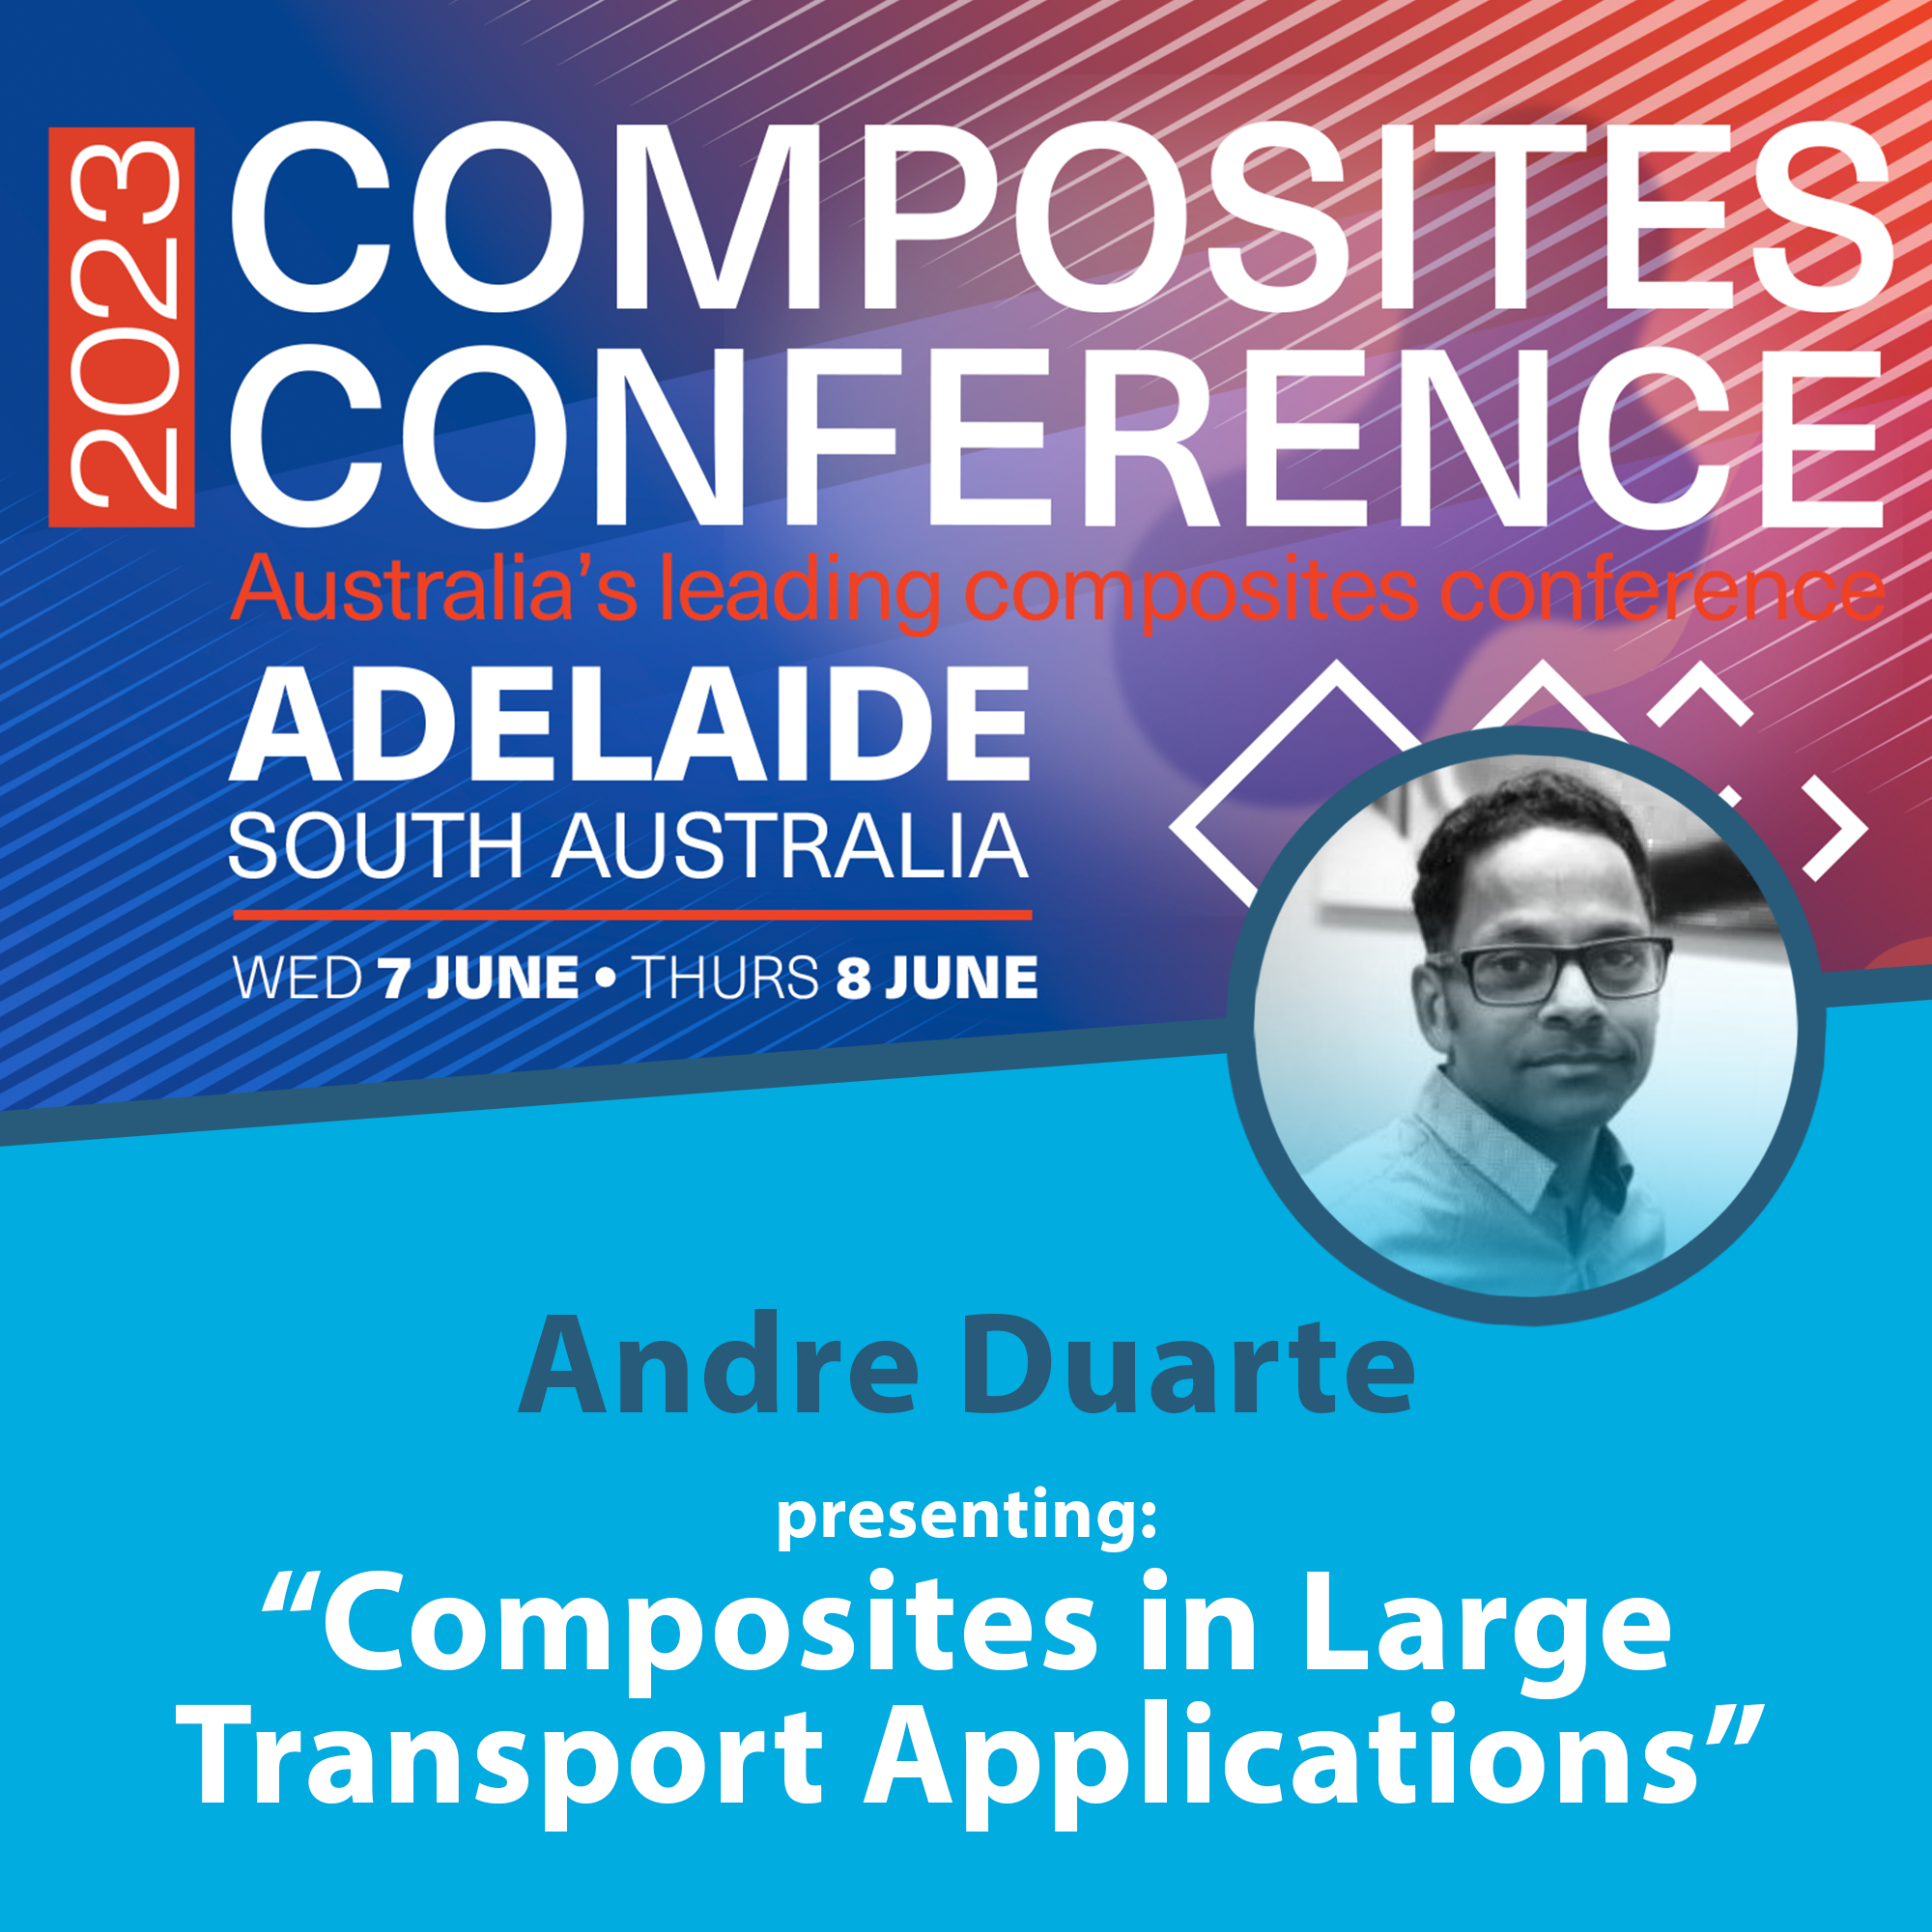 Andre Duarte presenting at Composites Australia Annual Conference 7 June 2023 in Adelaide, South Australia